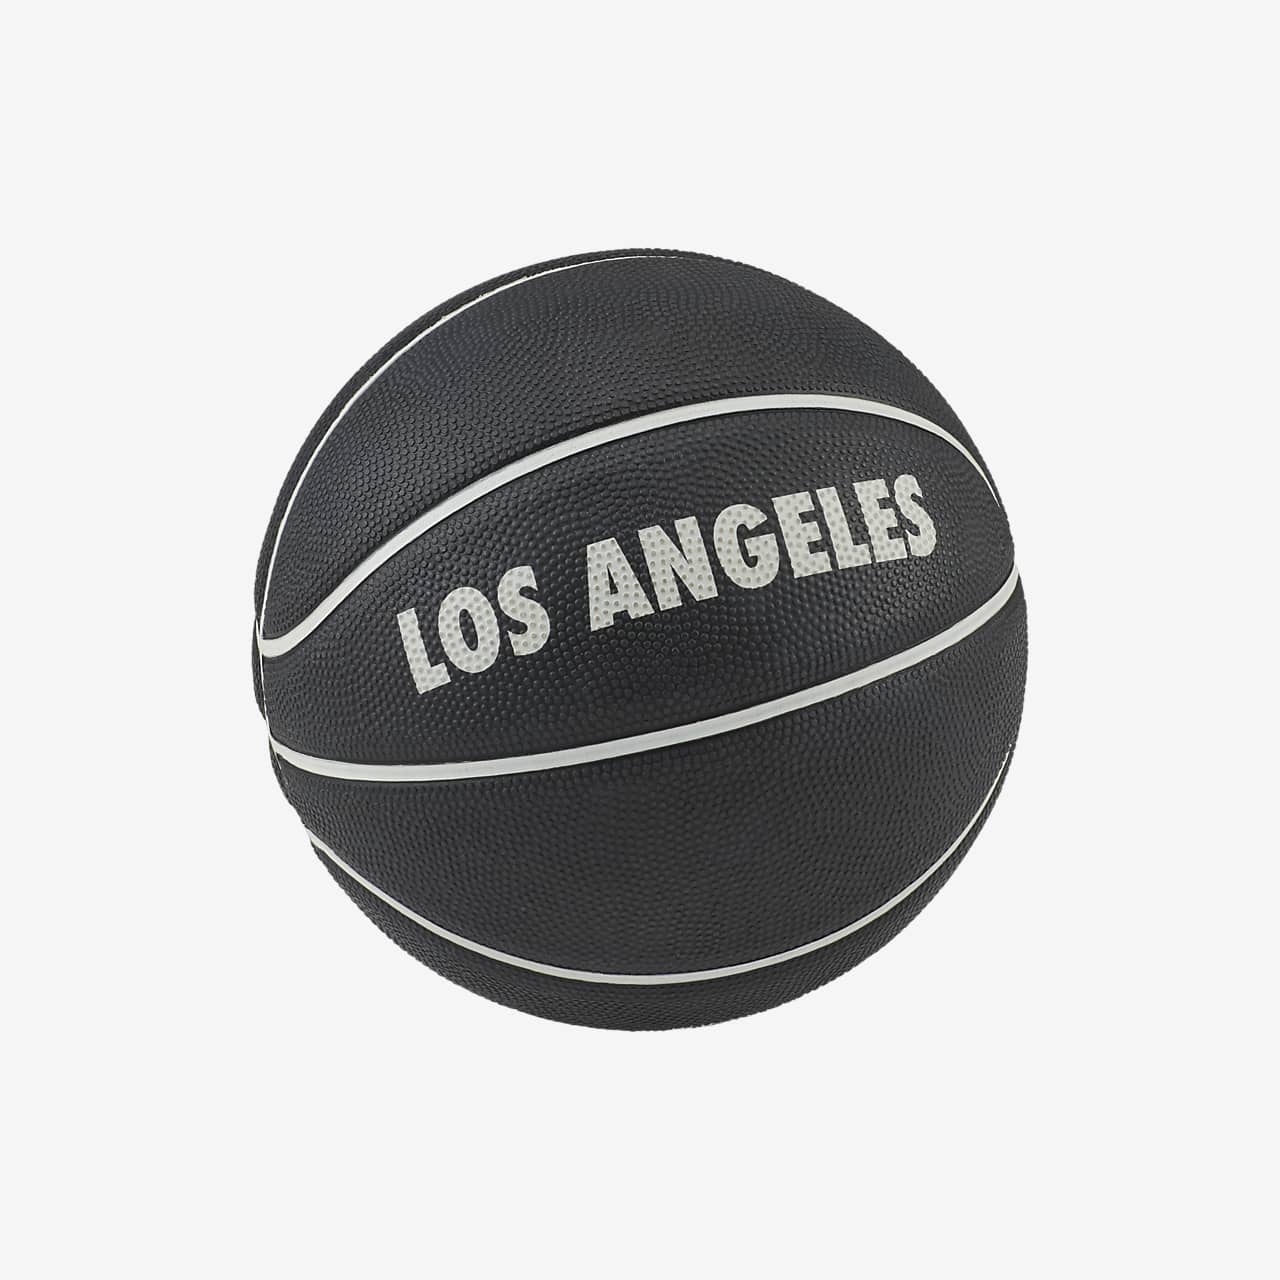 Nike Skills Los Angeles Basketball (Size 3)